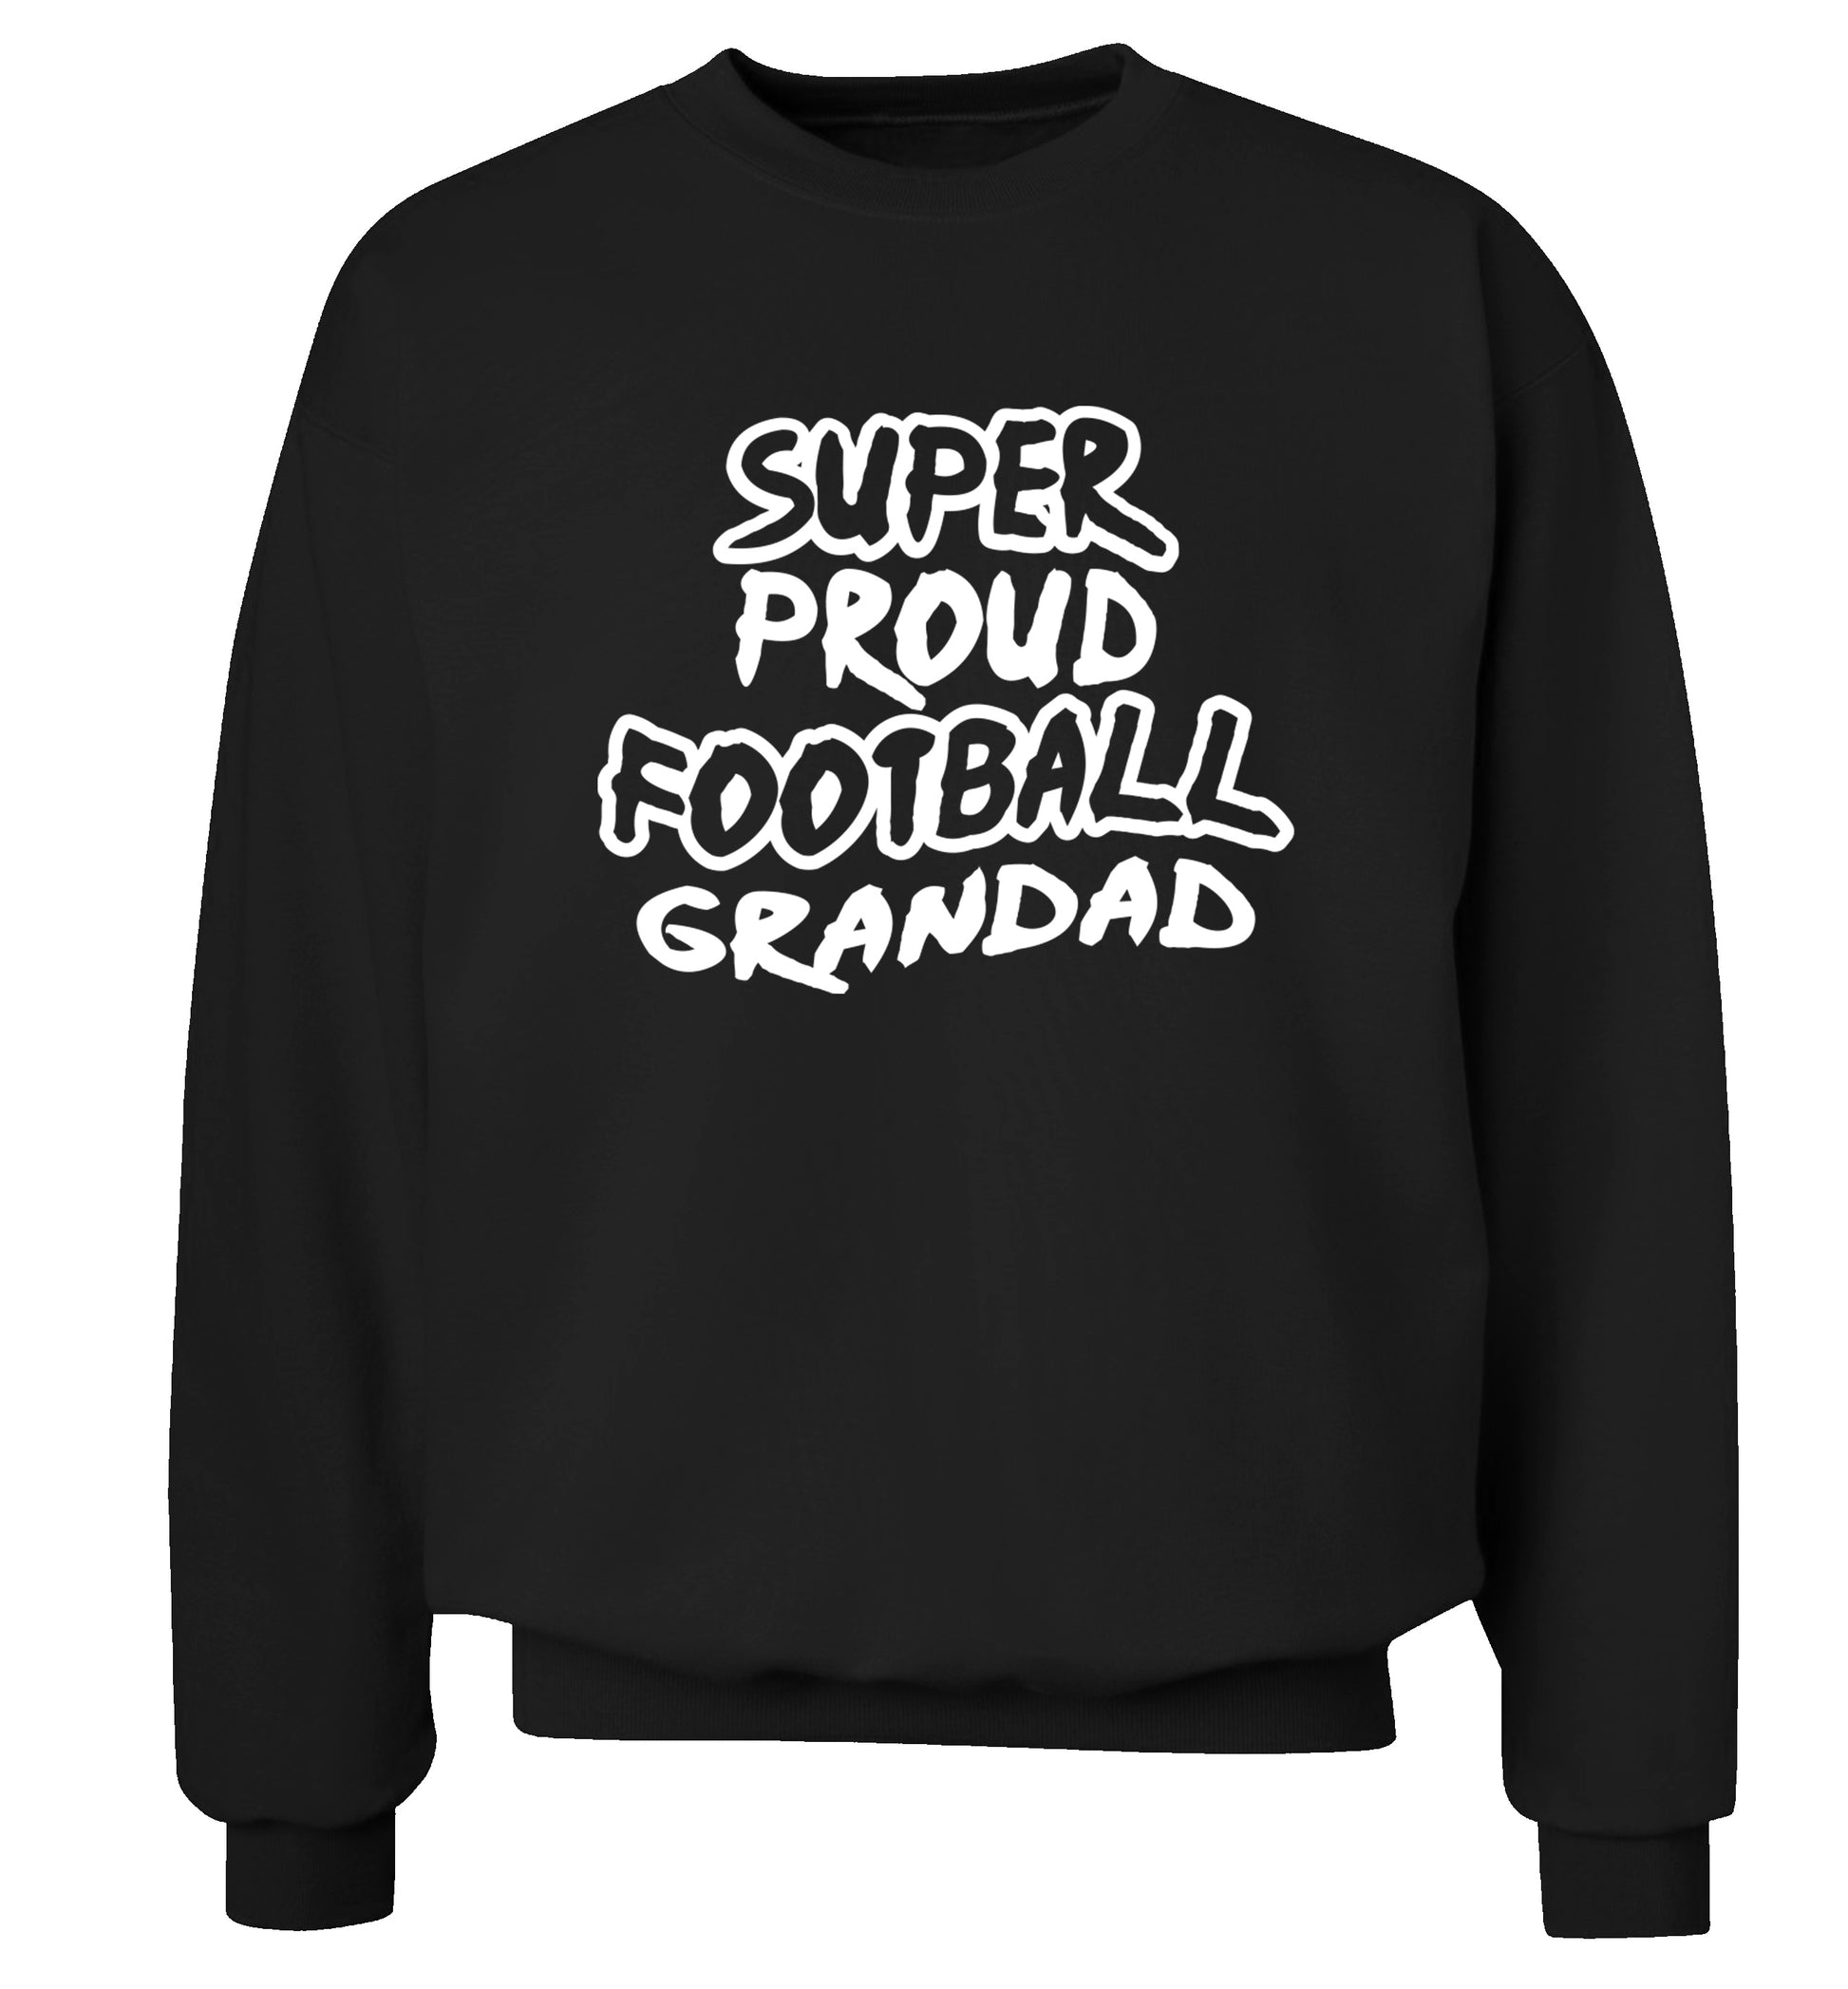 Super proud football grandad Adult's unisexblack Sweater 2XL